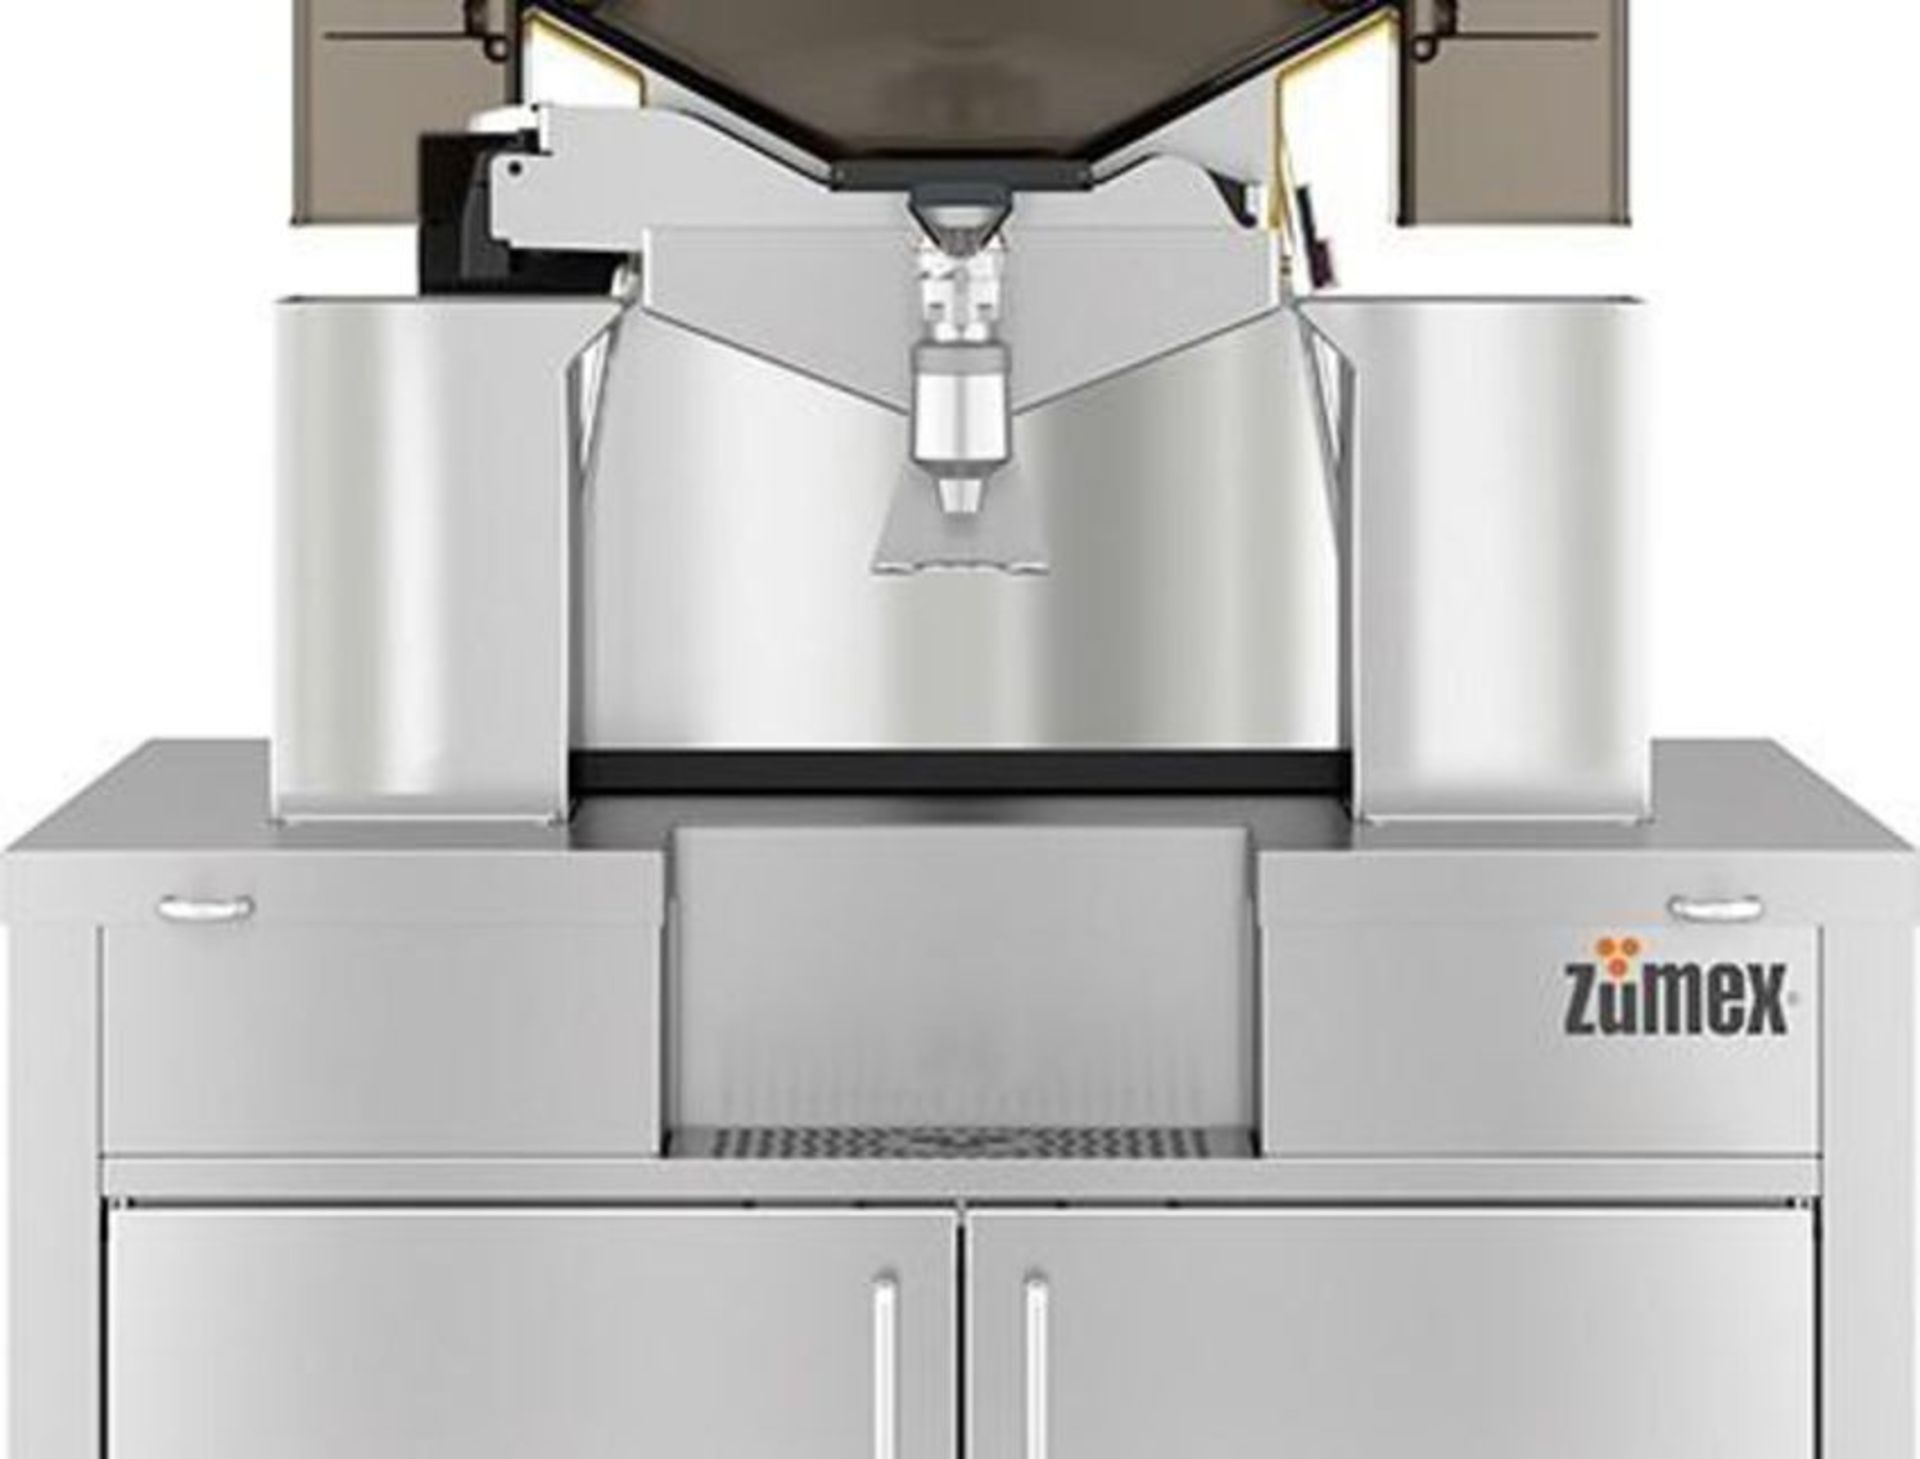 1 x Zumex Speed S +Plus Self-Service Podium Commercial Citrus Juicer - Manufactured in 2018 - - Image 20 of 20